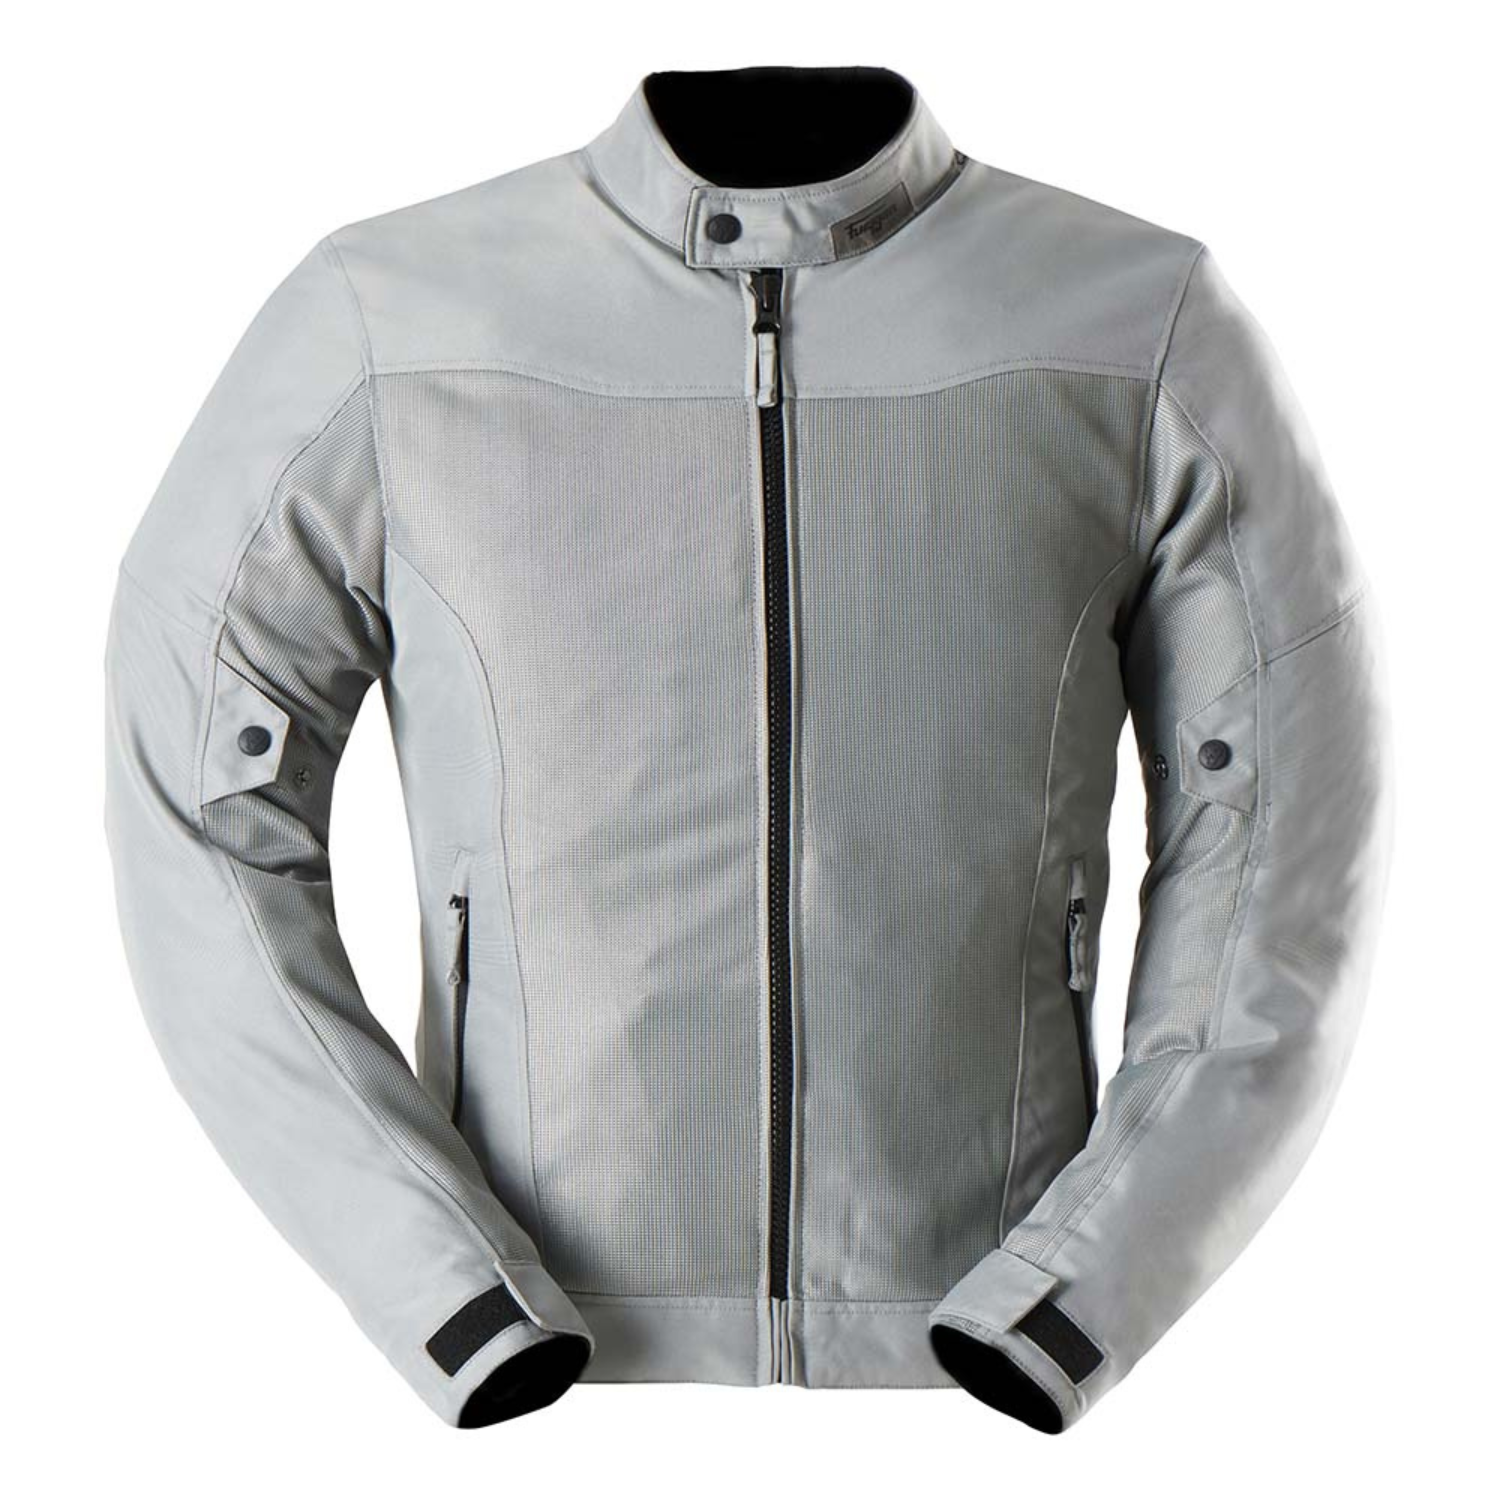 Image of Furygan Mistral Evo 3 Jacket Grey Taille M